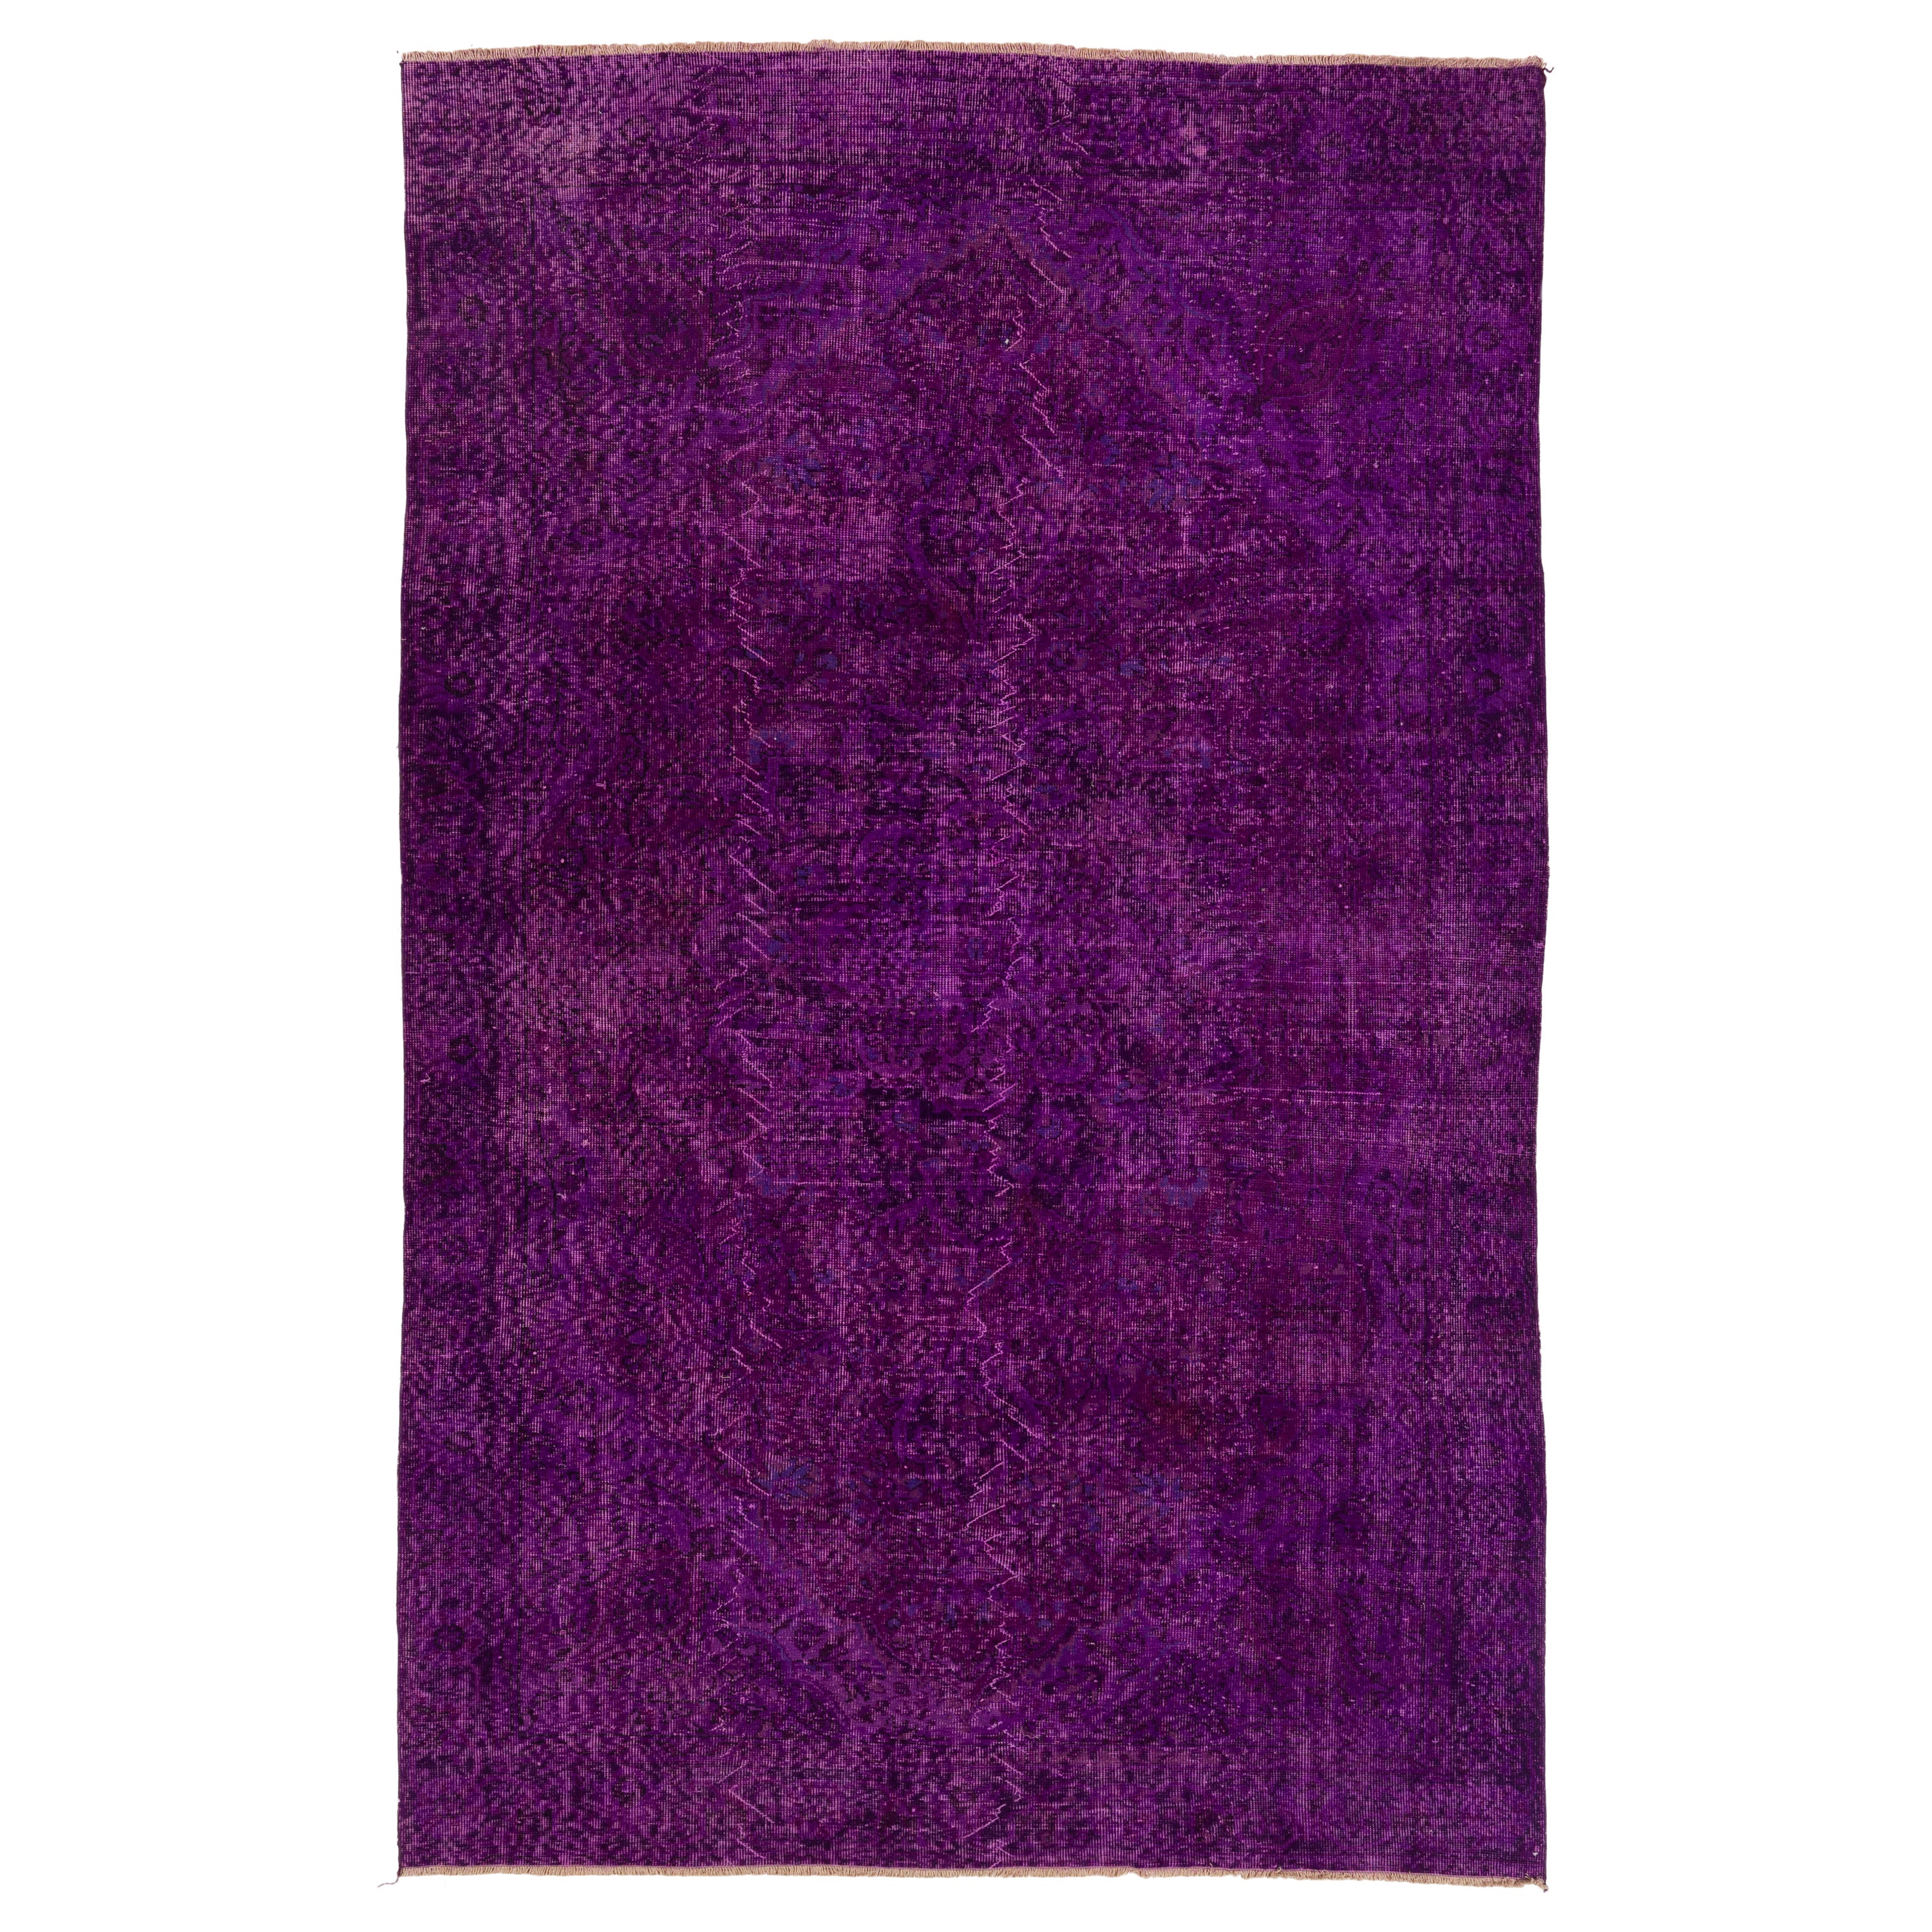 6.4x10.3 Ft Purple Handmade Turkish Area Rug, Contemporary Living Room Carpet For Sale